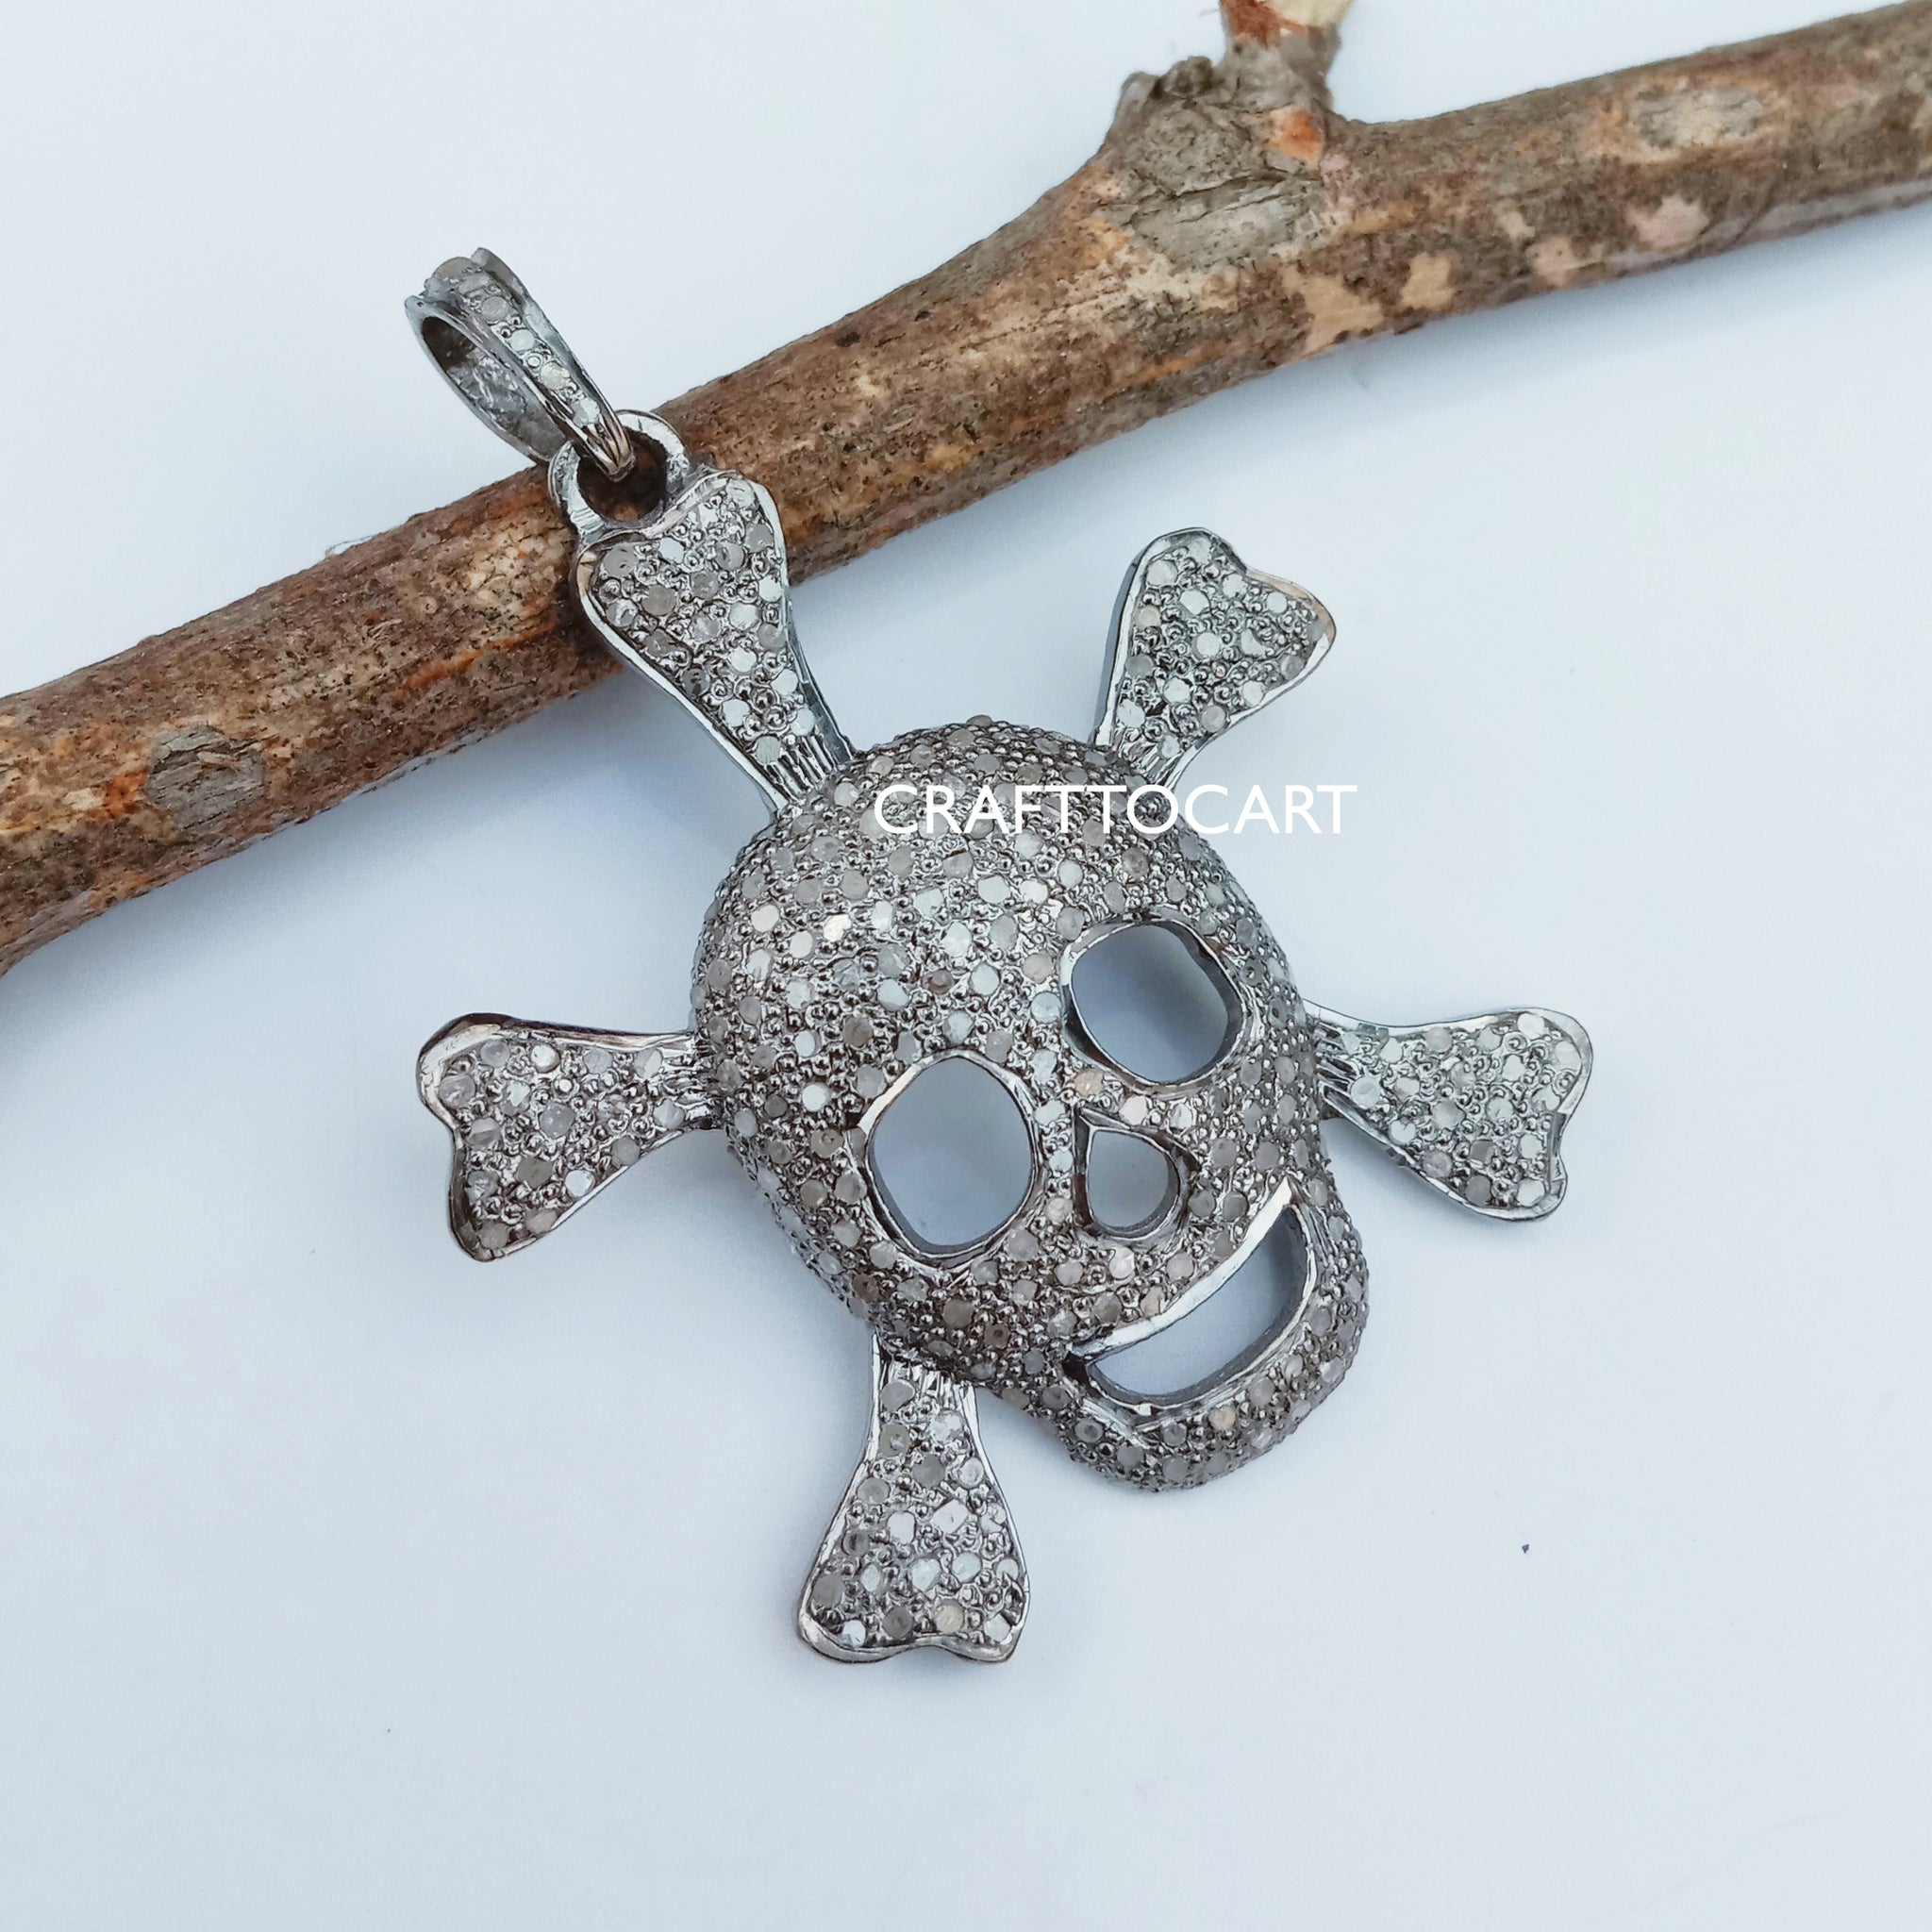 10 ct. t.w. Black and White Diamond Sugar Skull Pendant Necklace in  Sterling Silver. 18